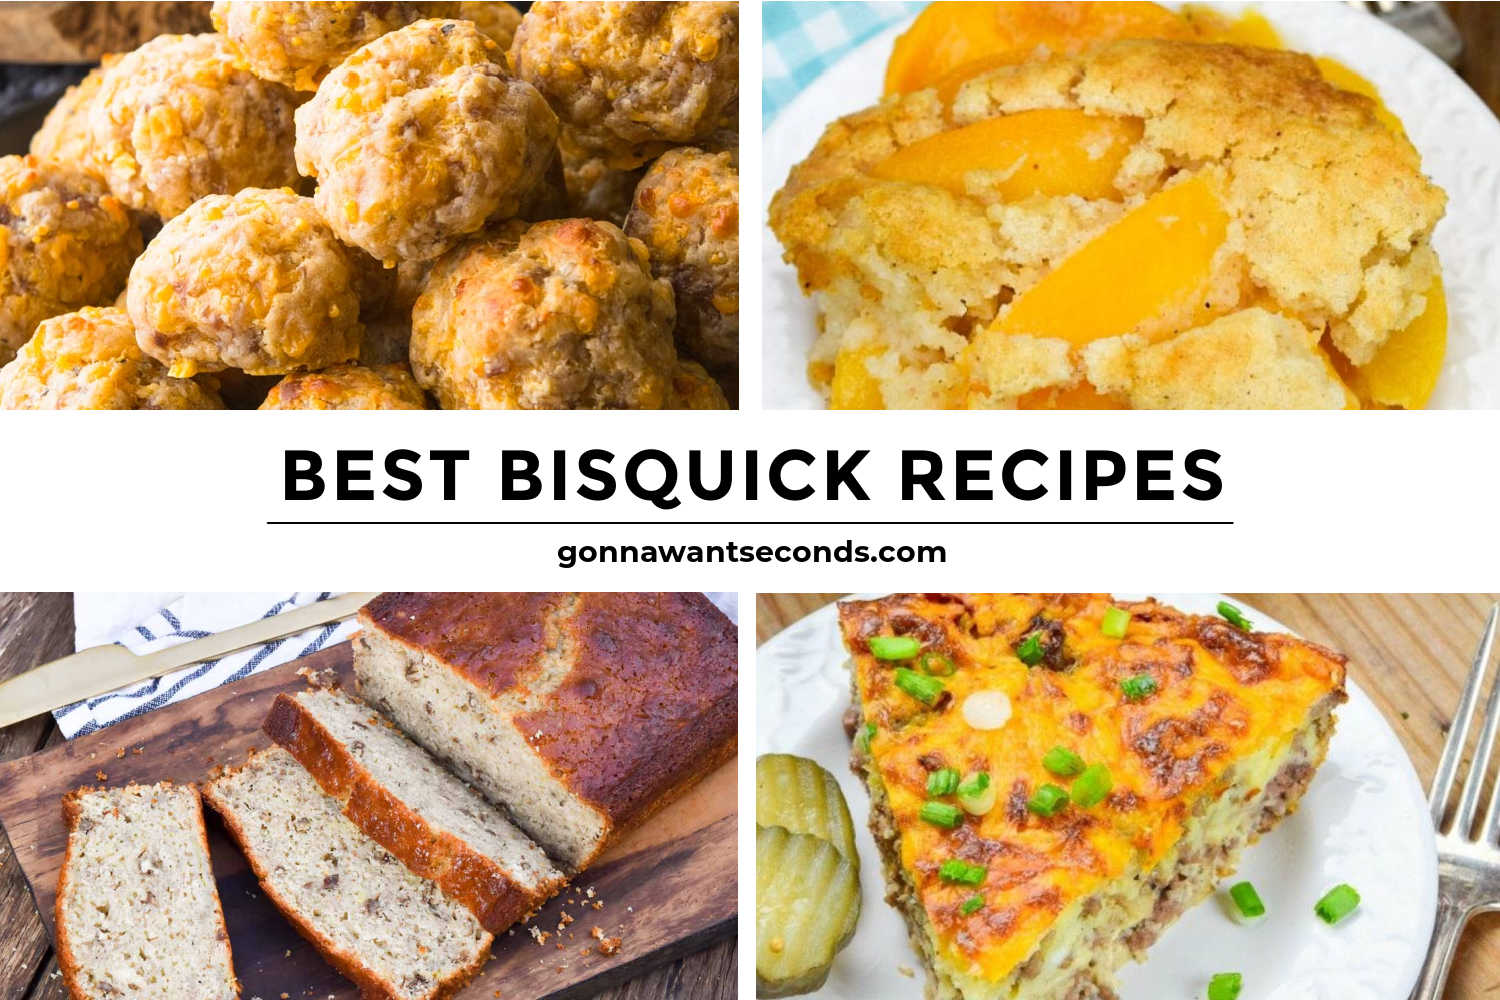 bisquick recipes montage